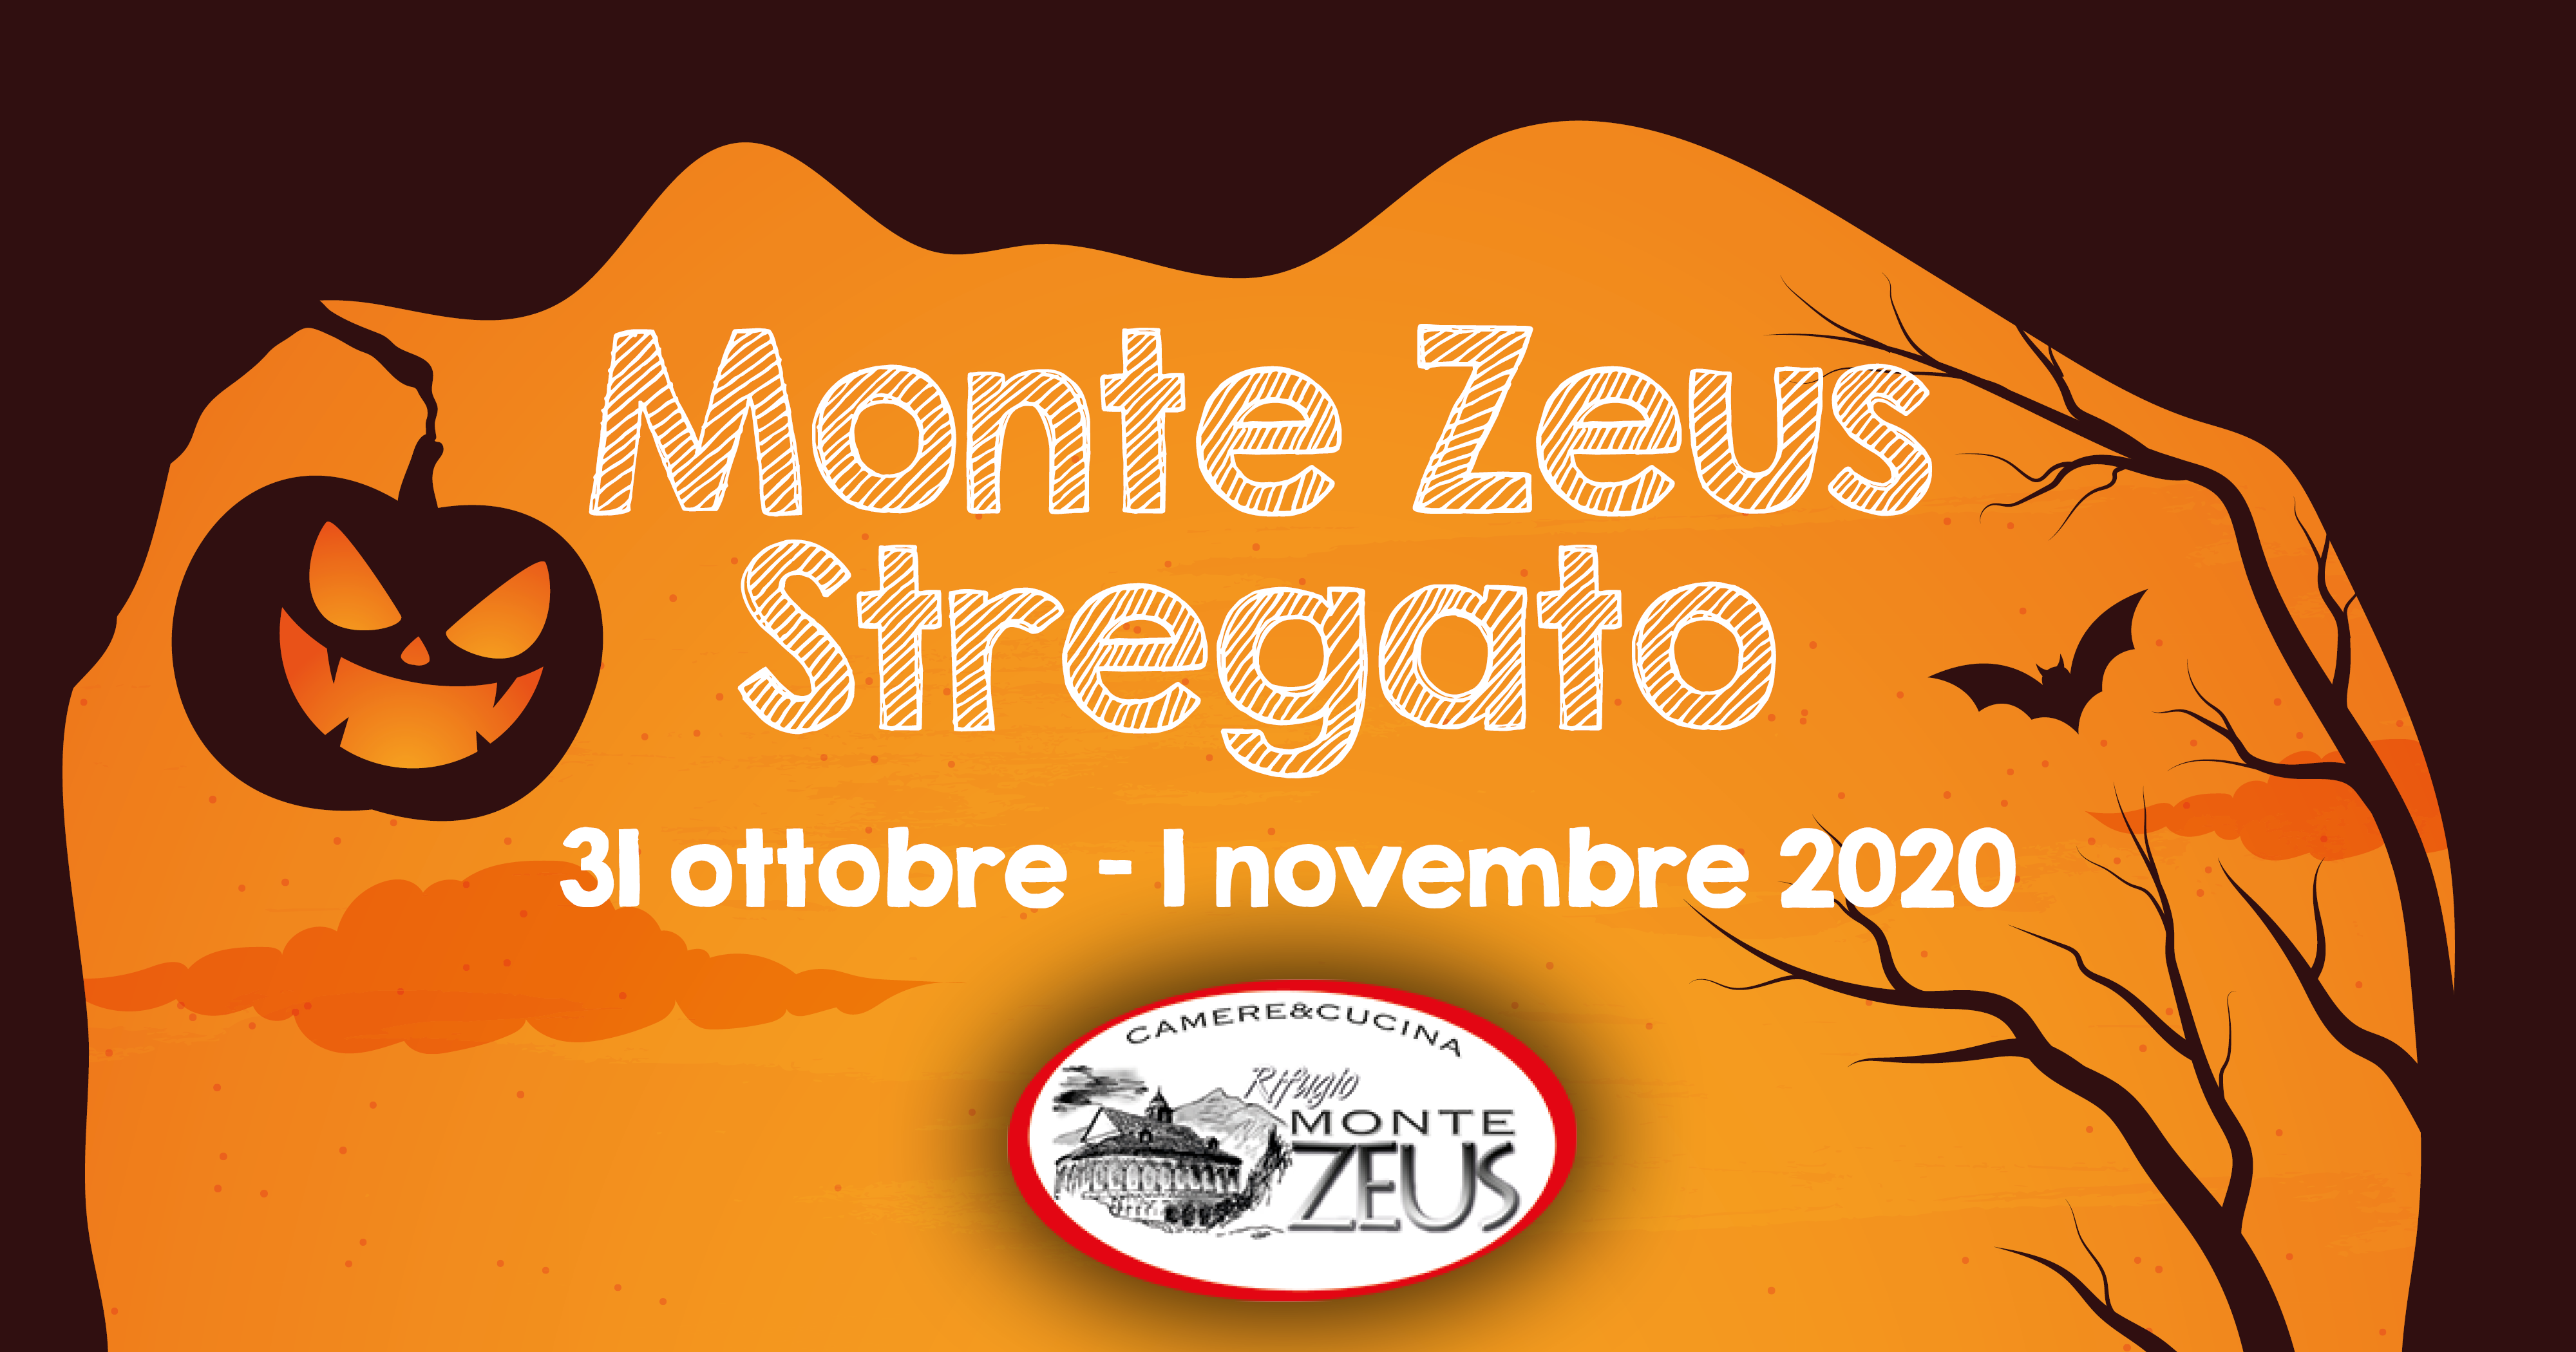 Monte Zeus Stregato – Weekend in Rifugio